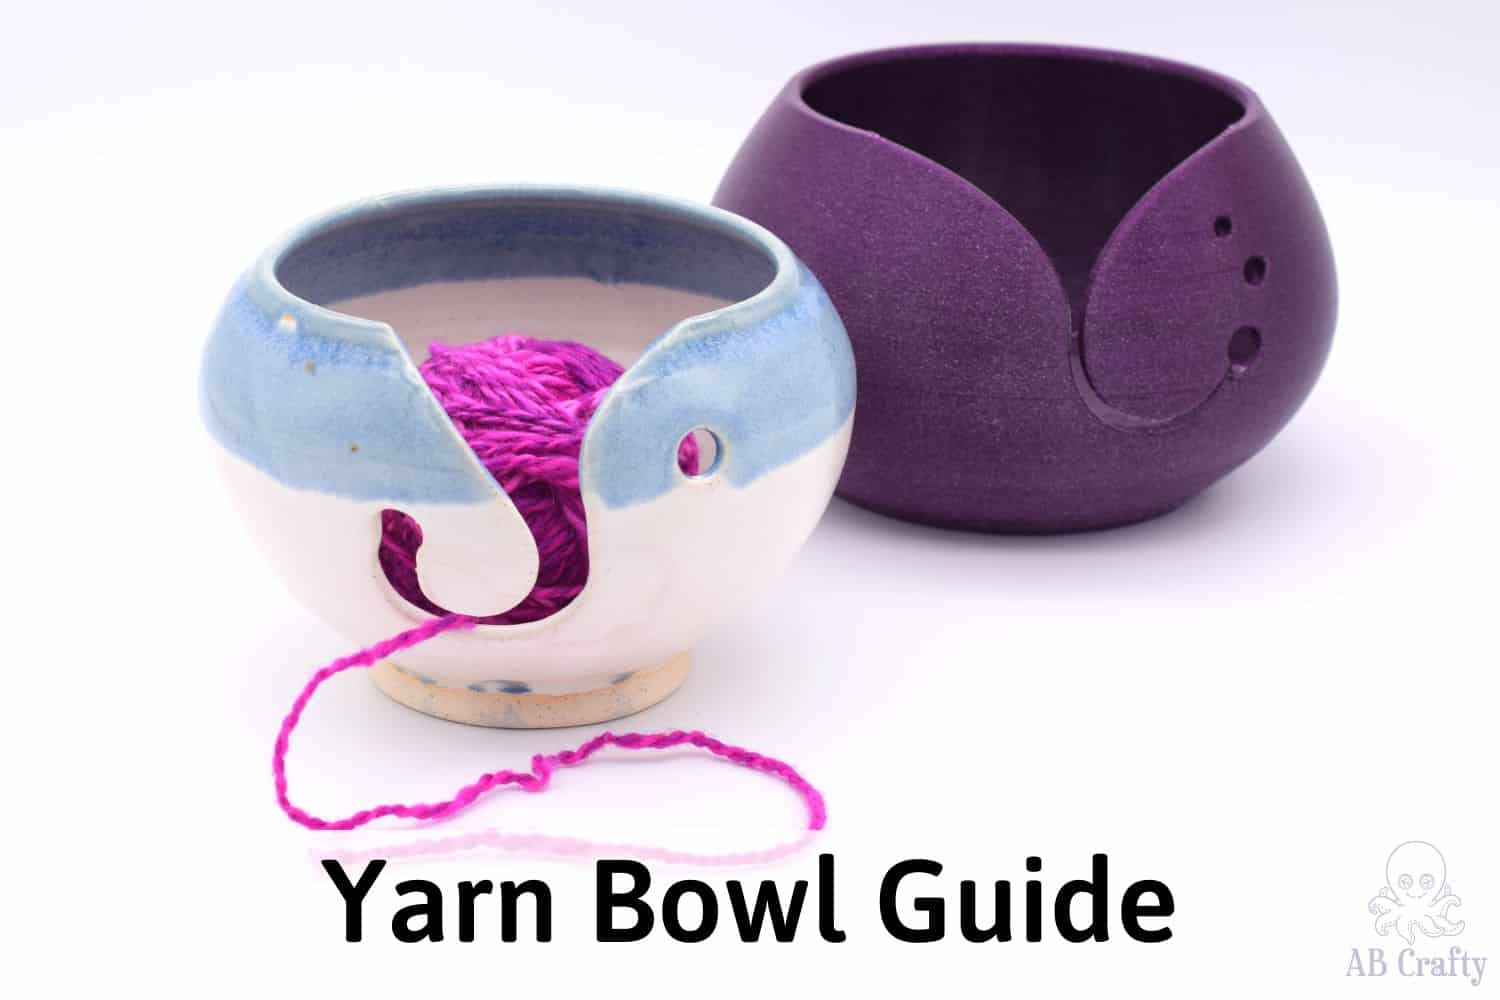 Large Purple Red LOVE Ceramic Yarn Bowl Made to Order 